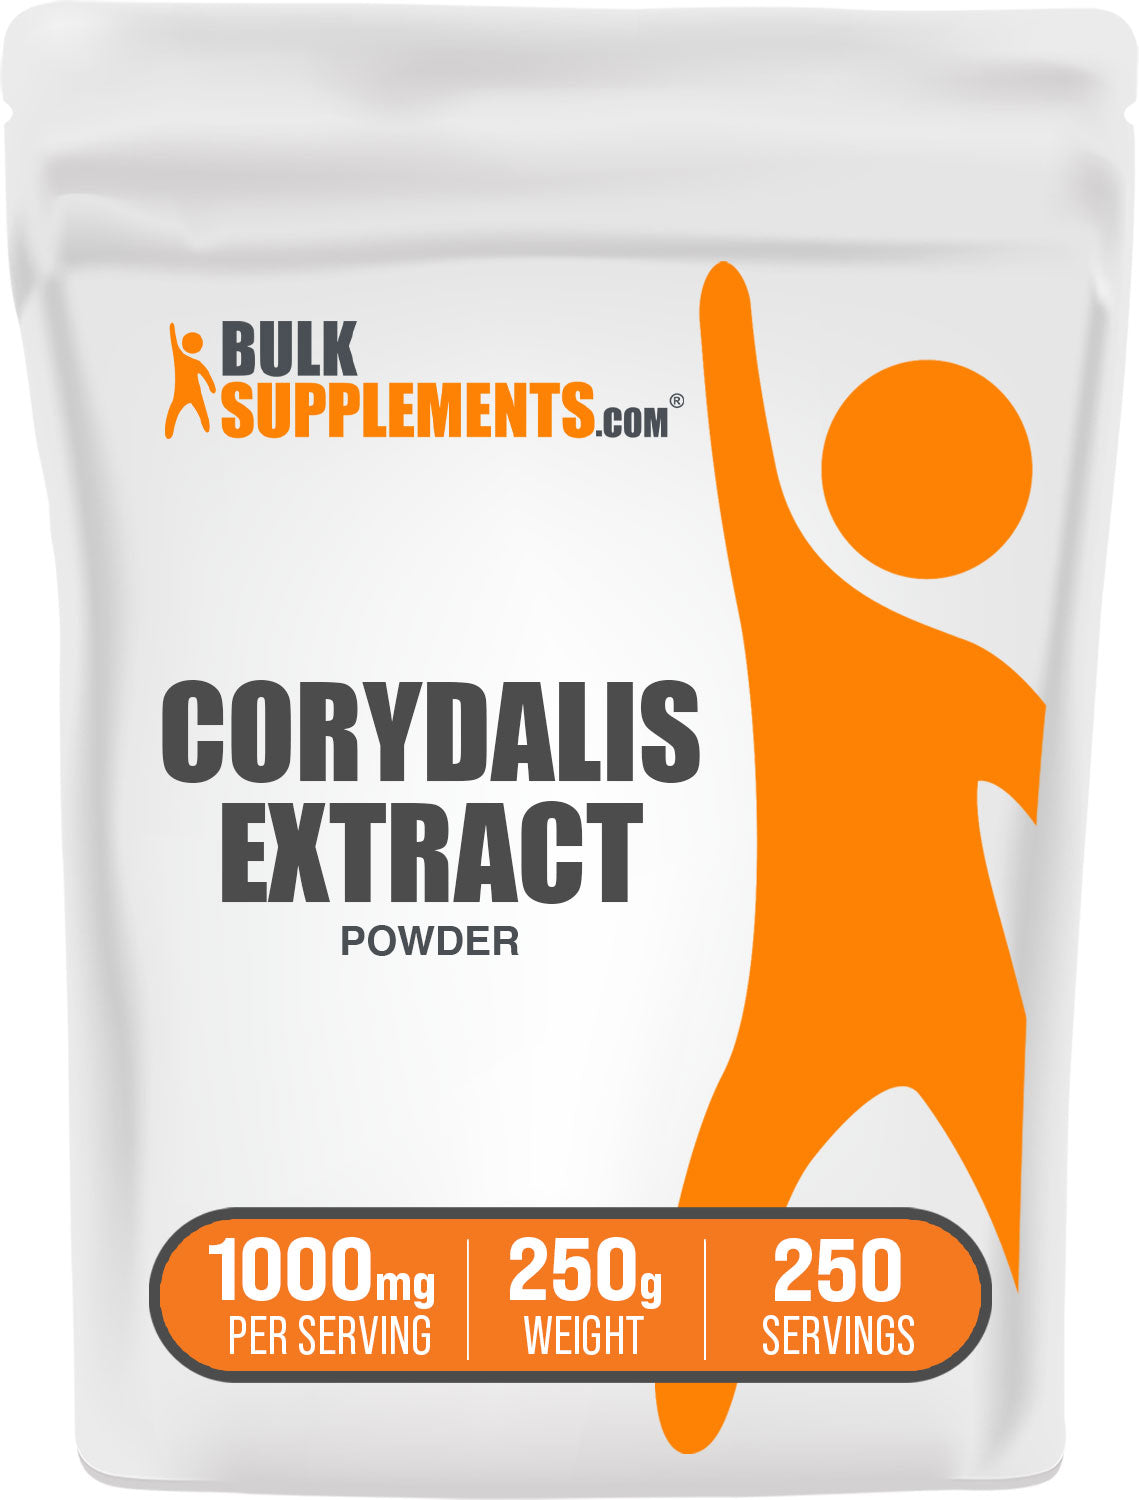 BulkSupplements.com Corydalis Extract Powder 250g Bag